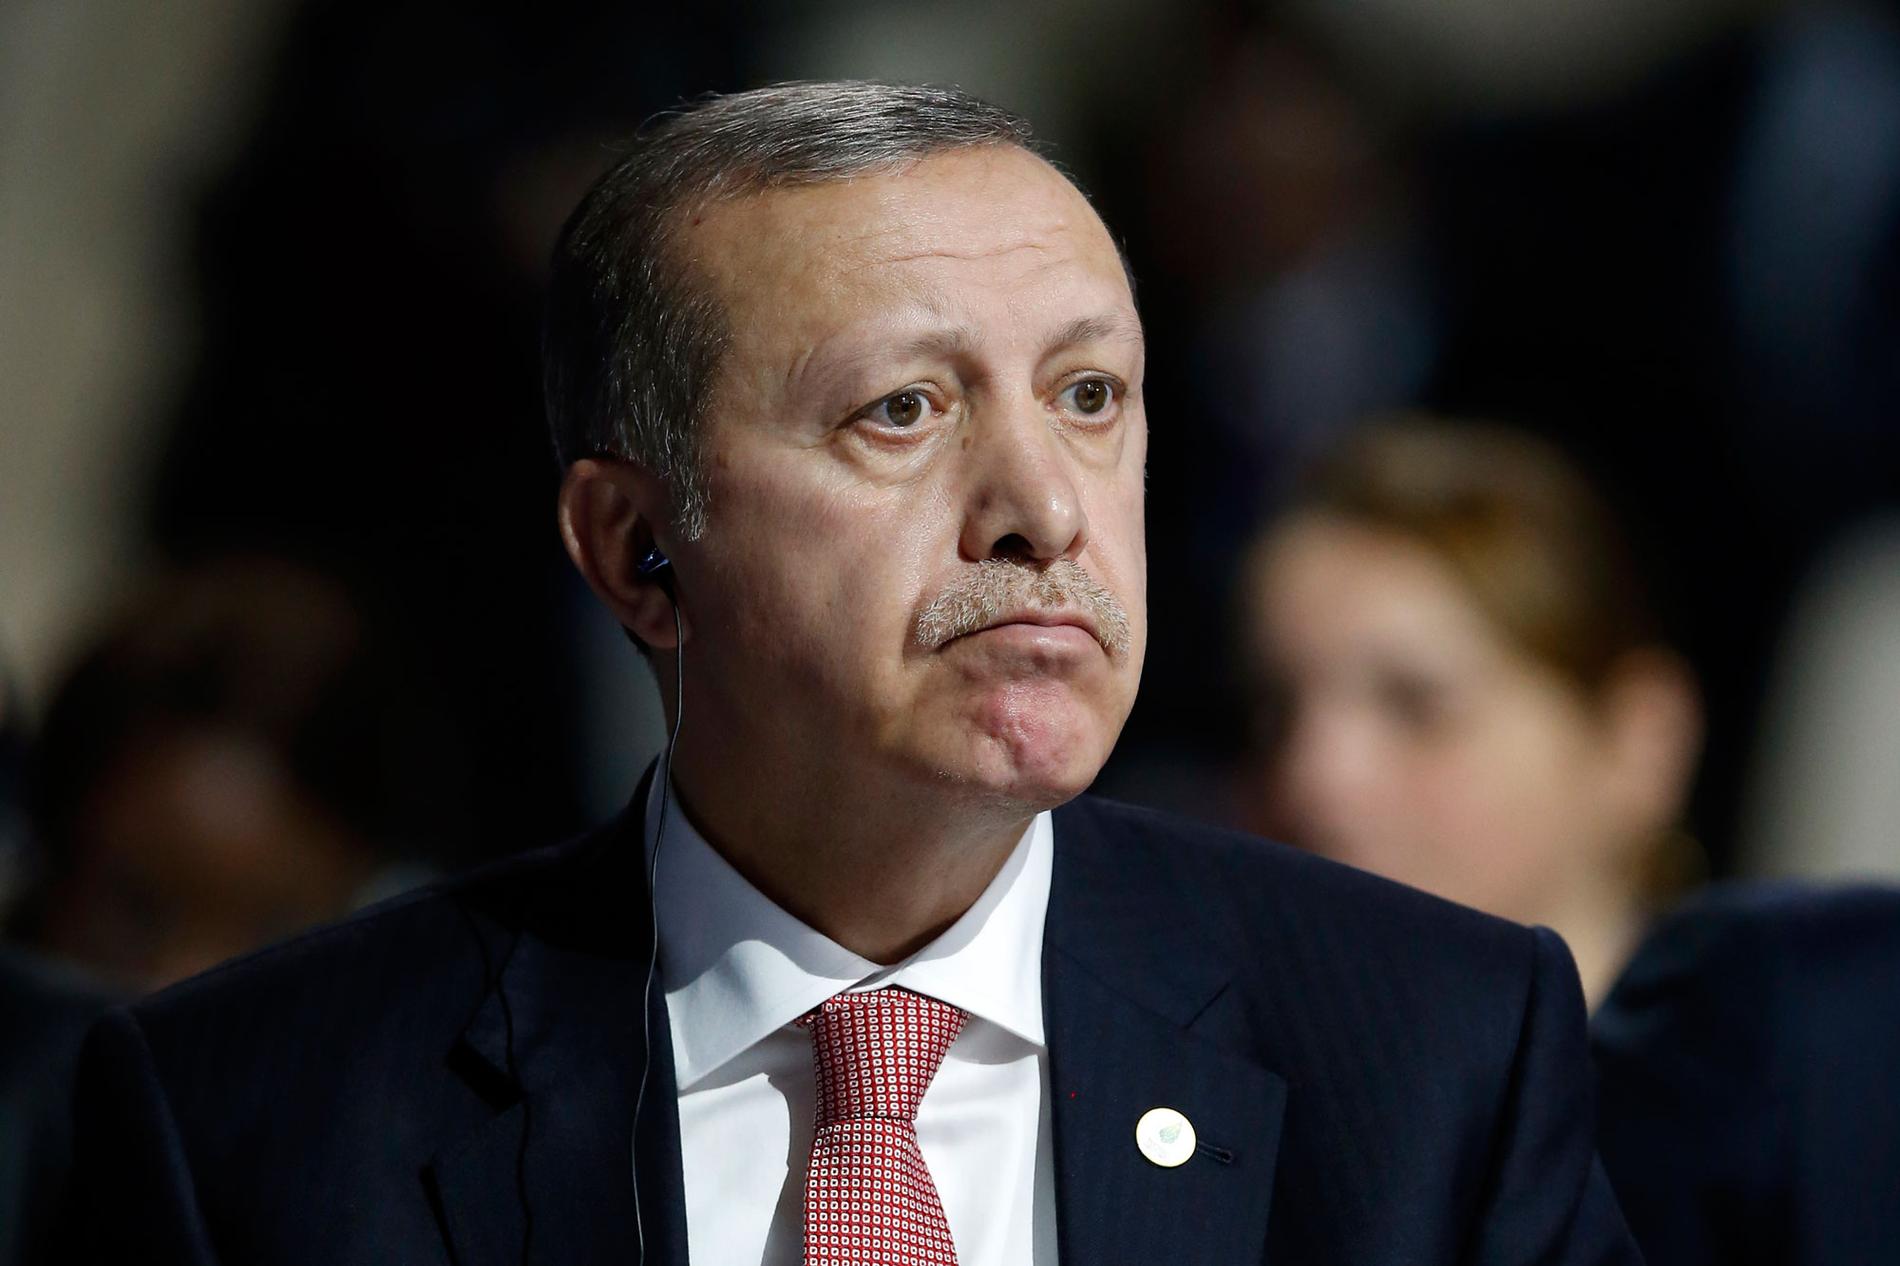 Turkiets president Recep Tayyip Erdoğan.